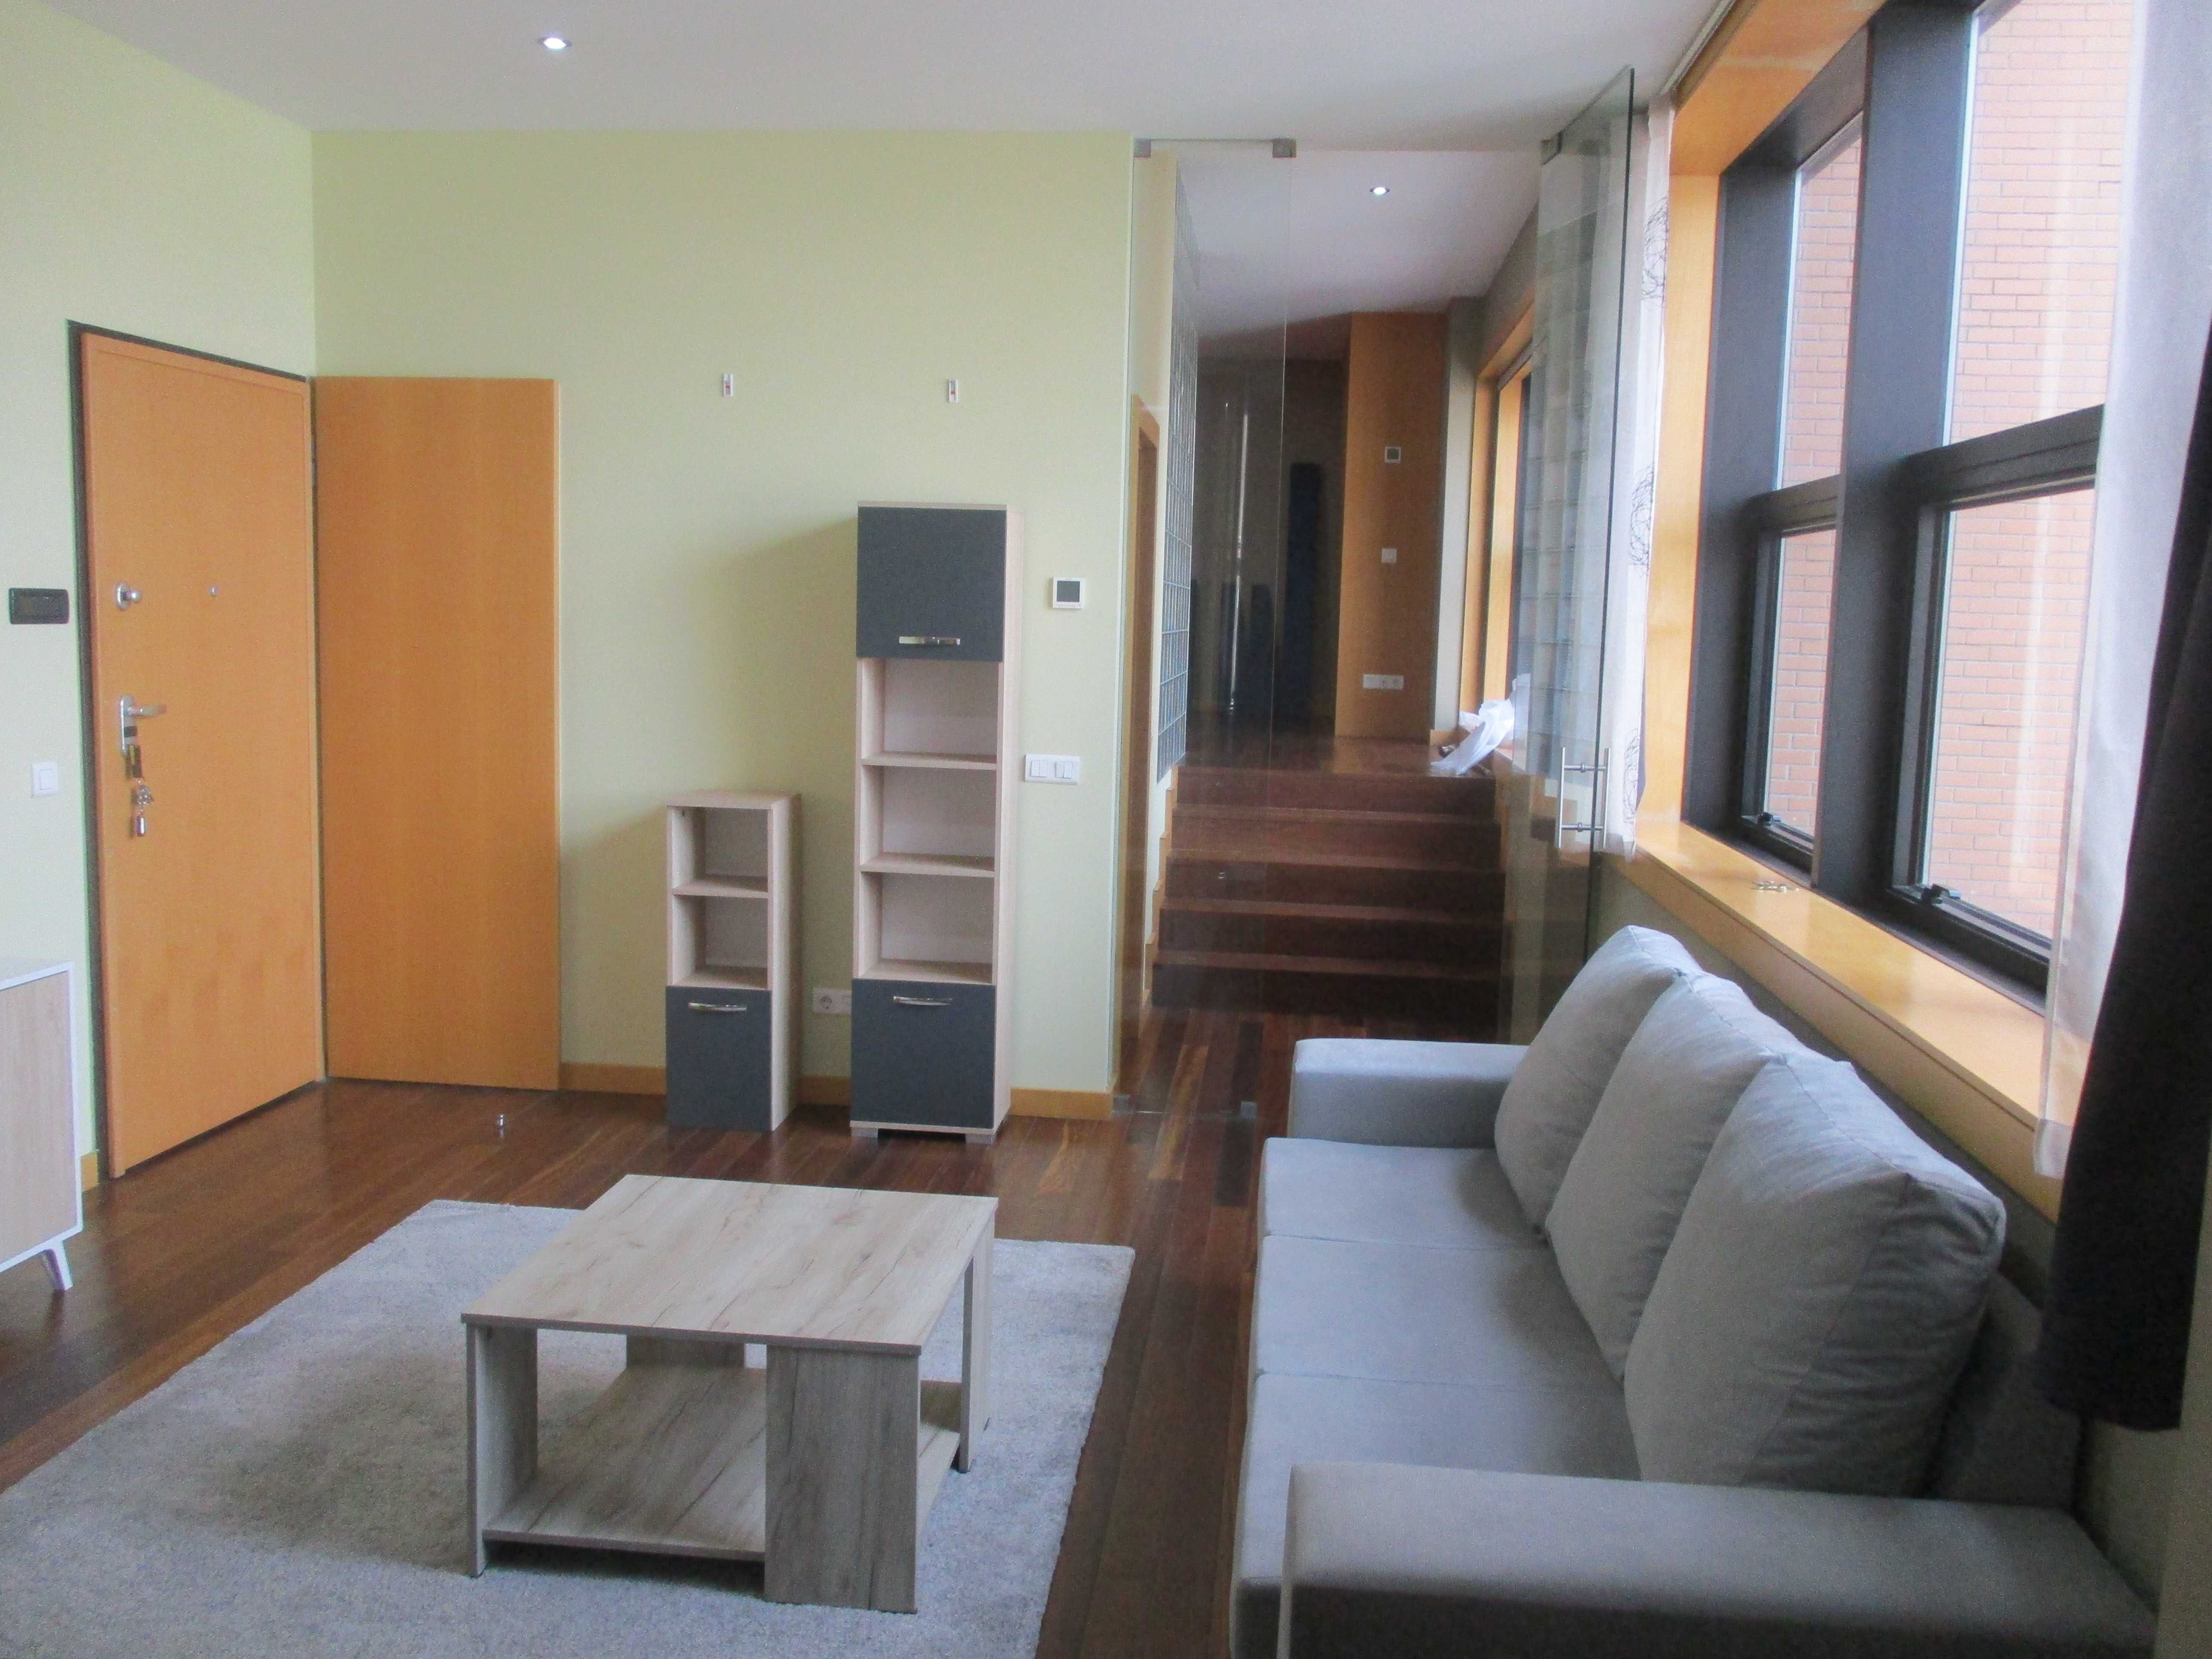 Apartamento T1, mobildo novo, junto avenida Boavista e Serralves